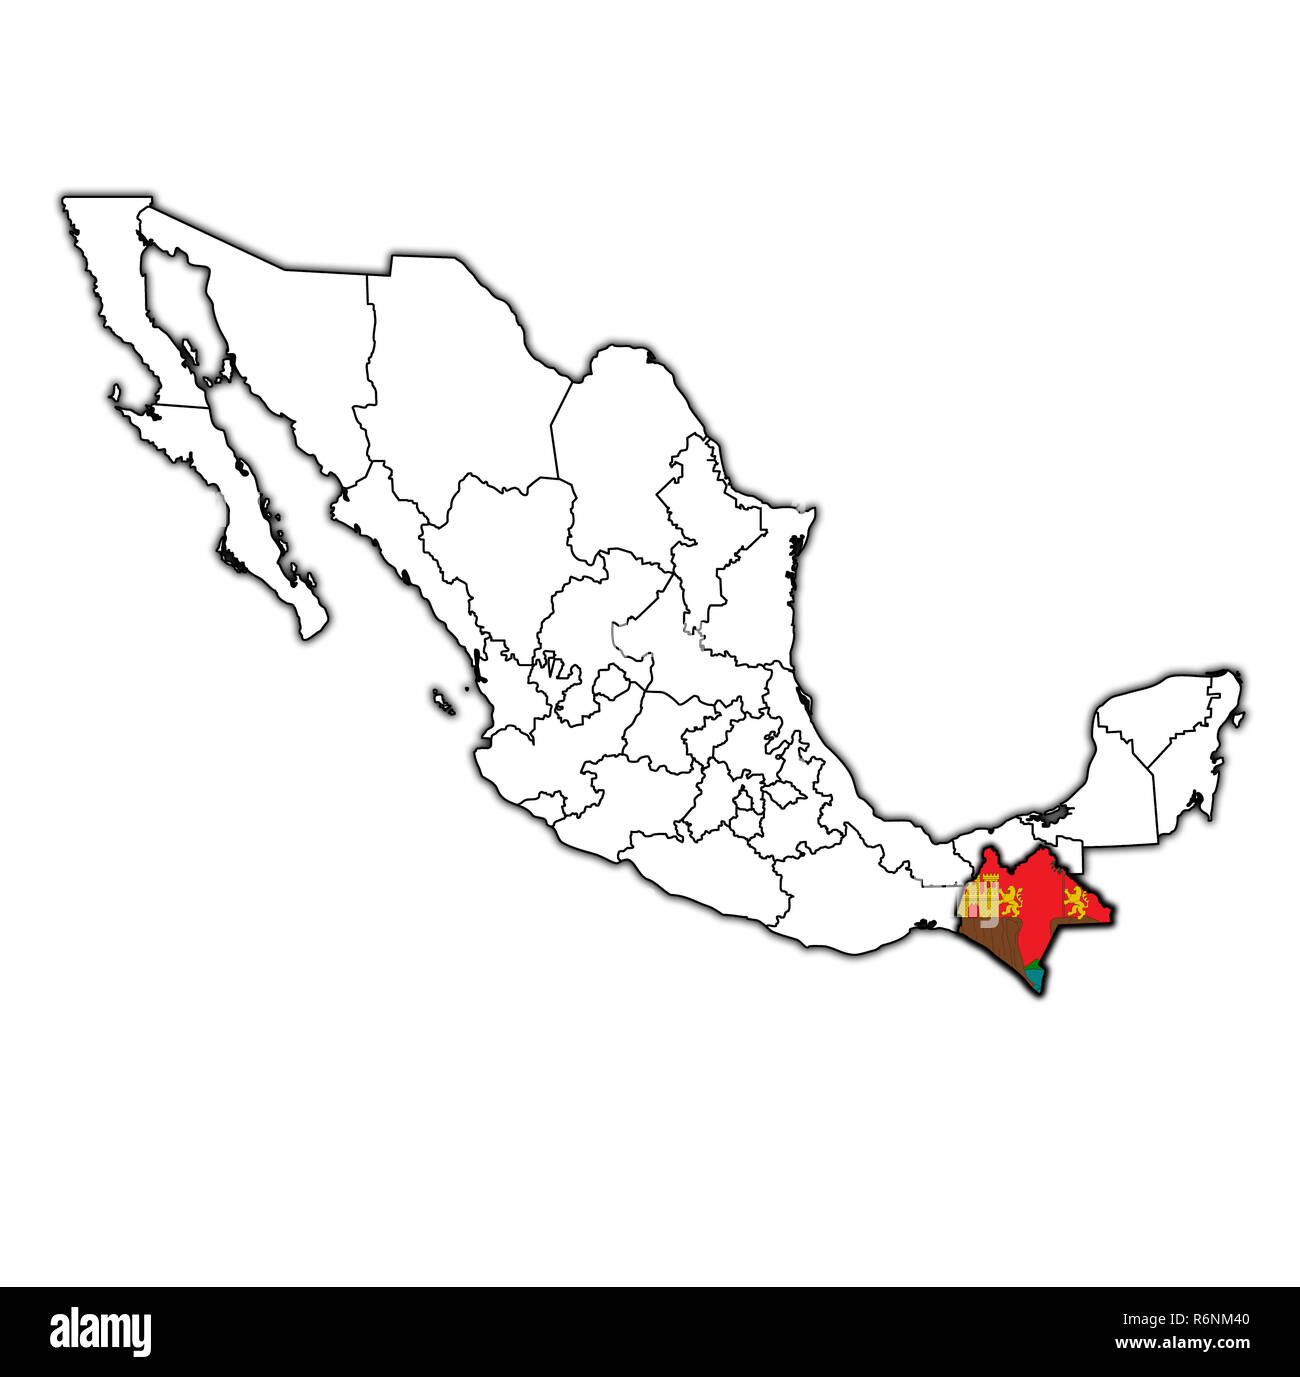 alamy stock photo map mexico